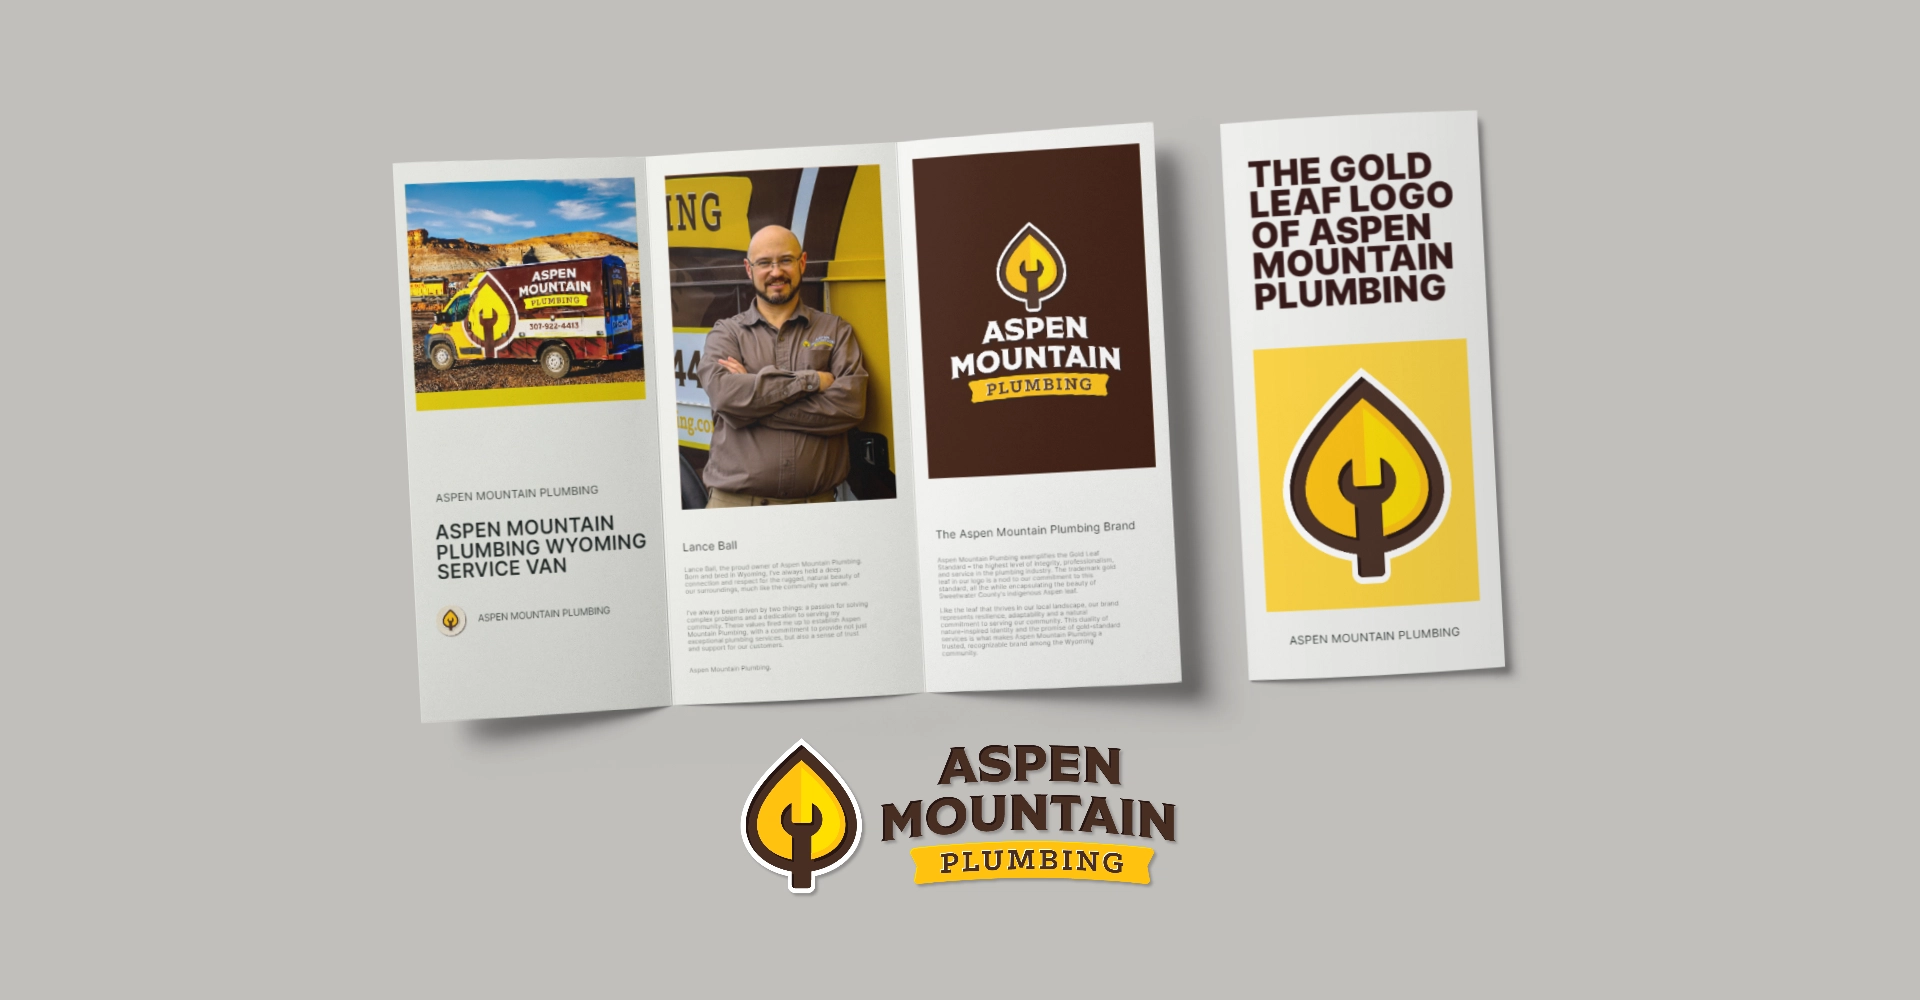 Aspen Mountain Plumbing LLC - Rock Springs Plumbers Logo